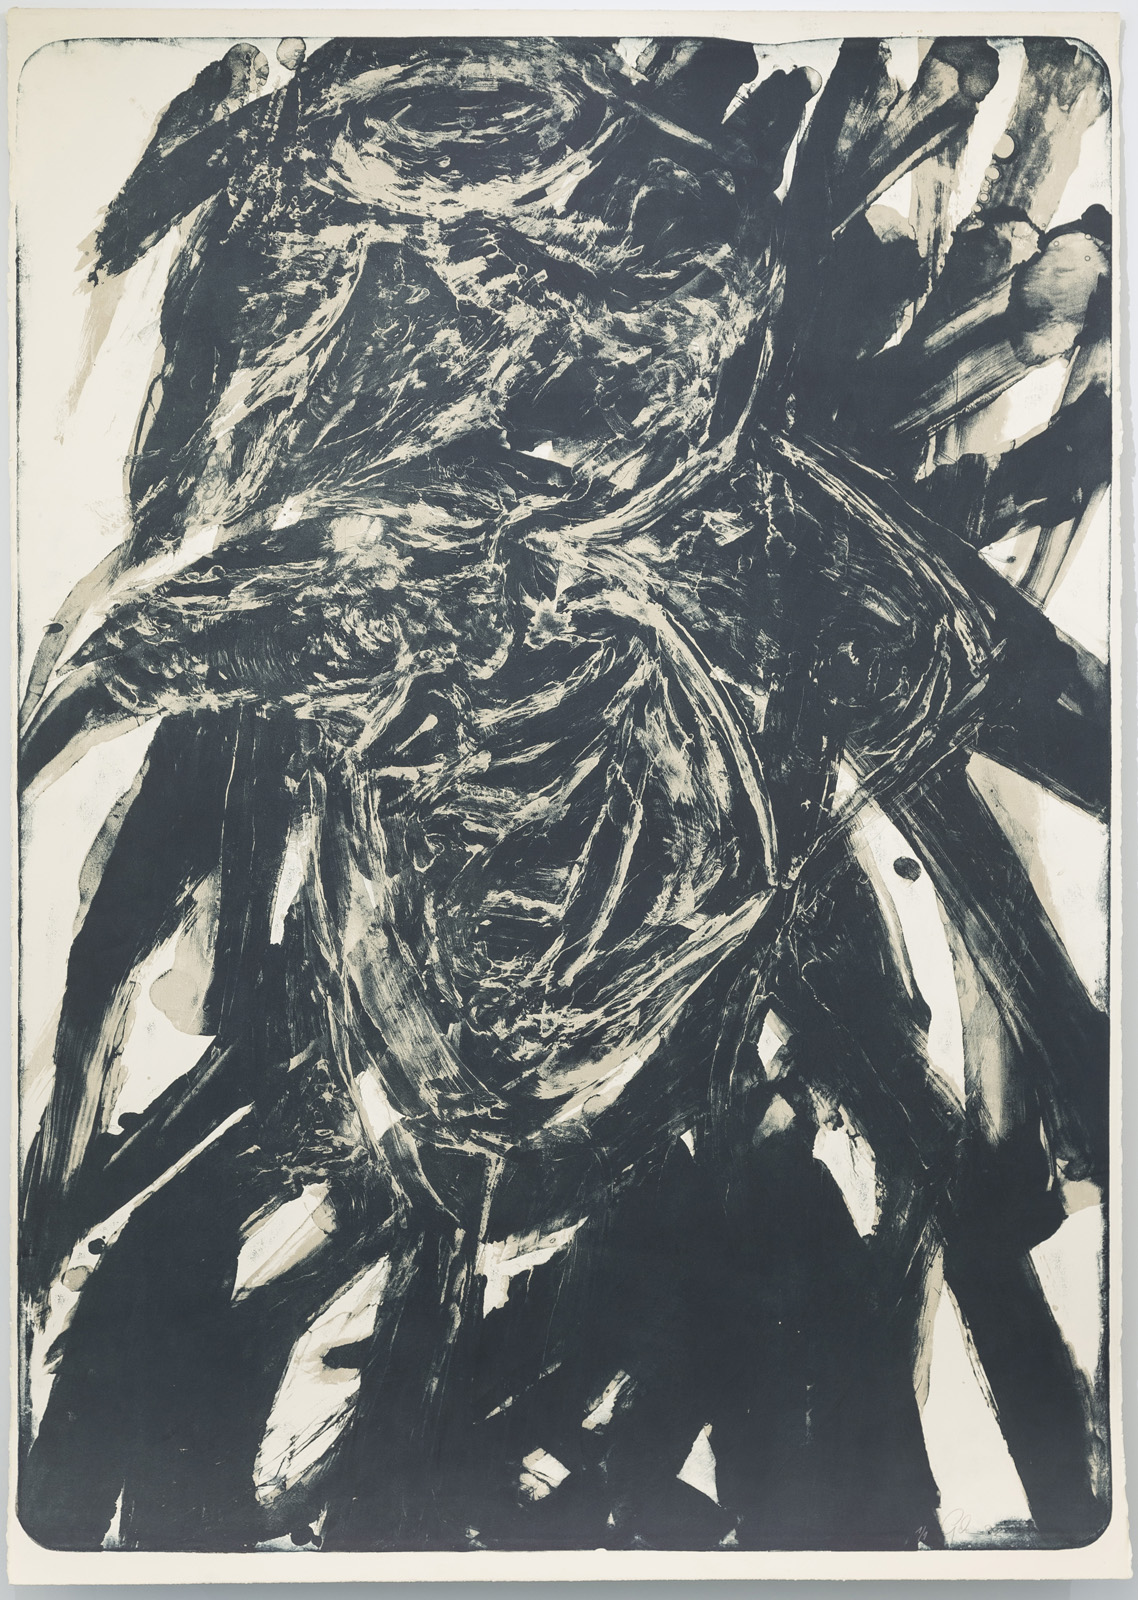 Grüner Adler, Lithographie, Unikat, 177 x 124 cm, 1992